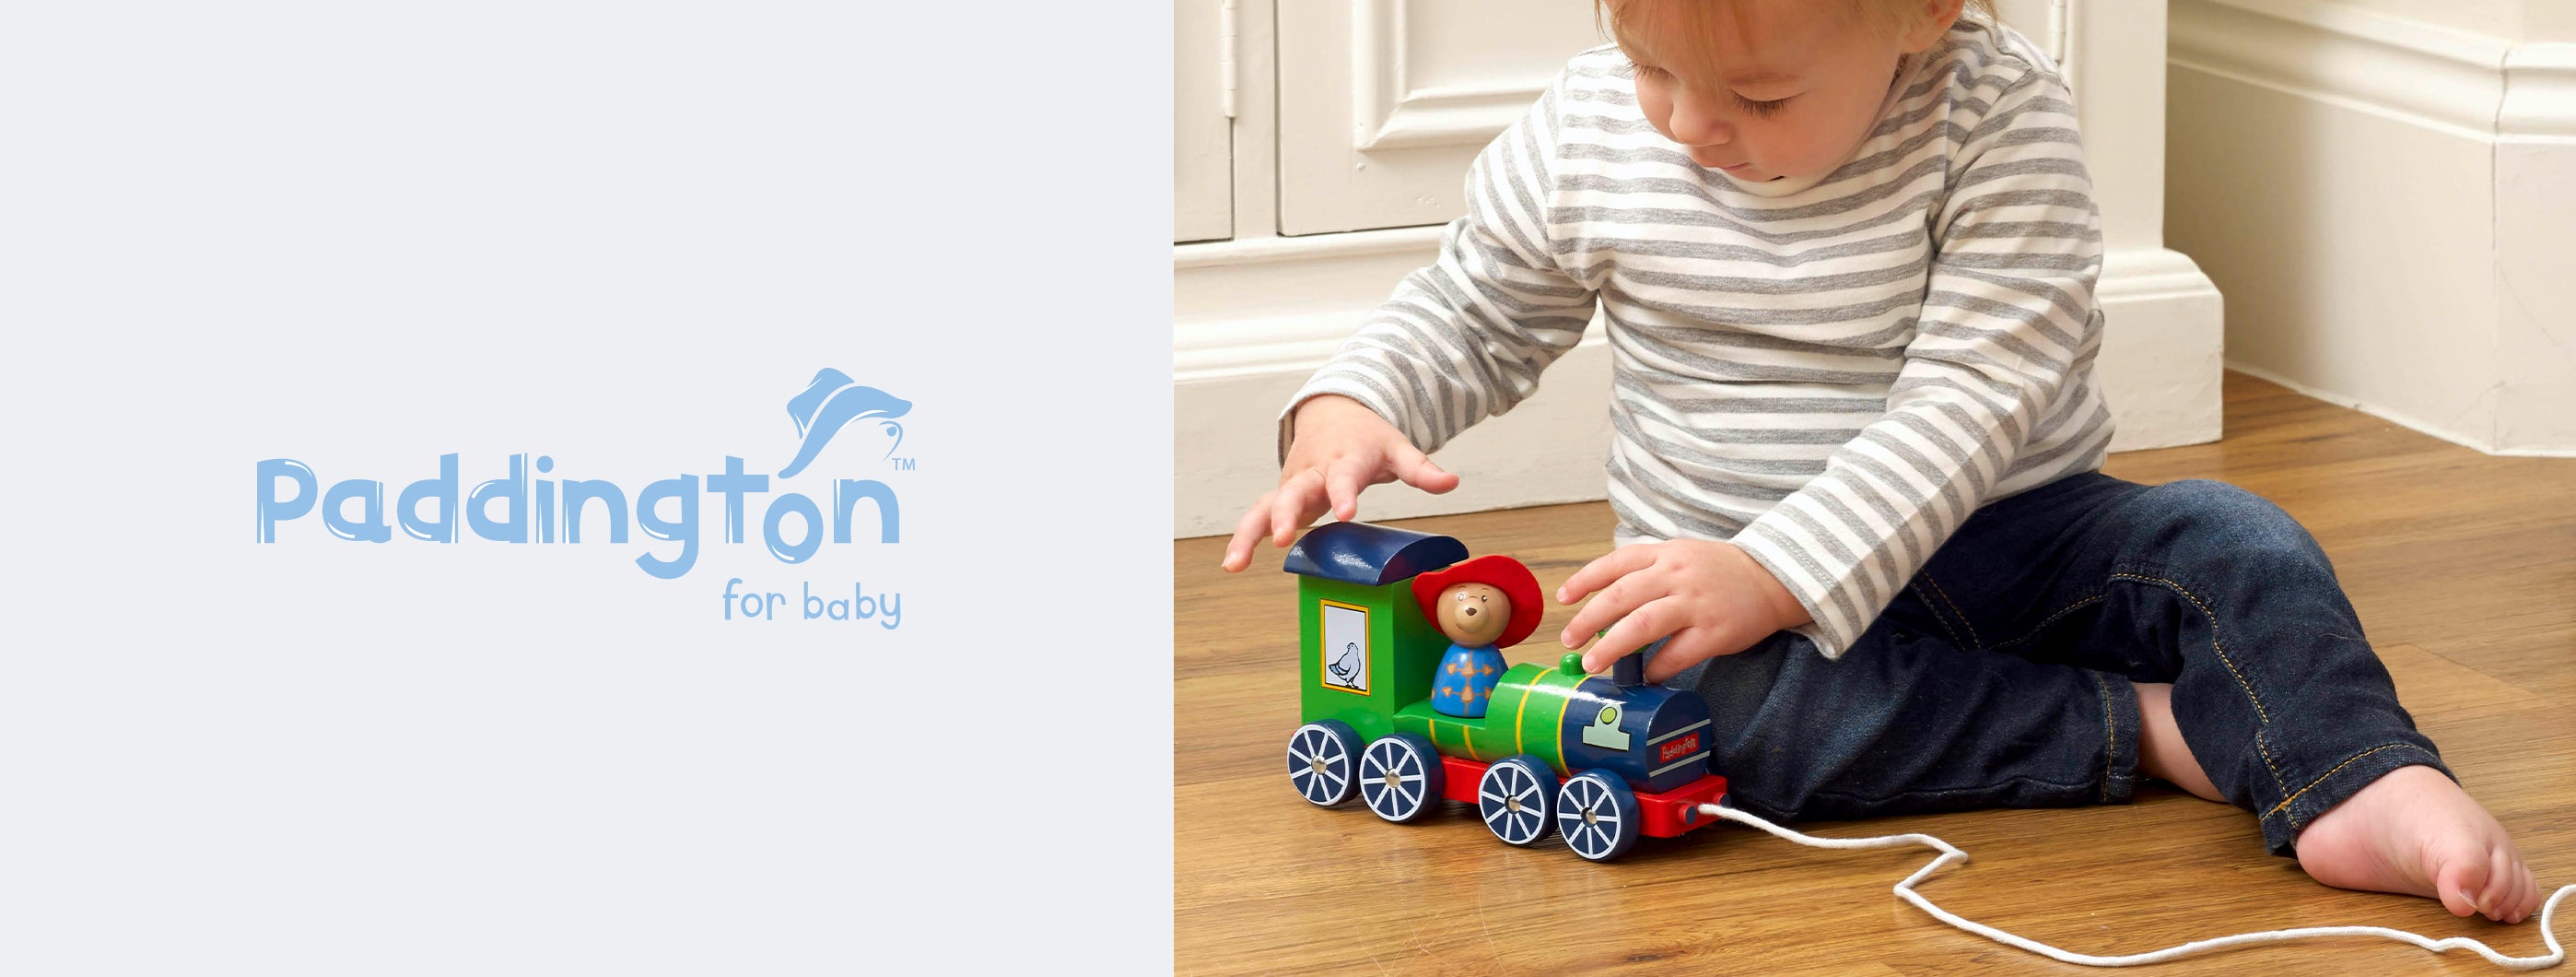 Paddington™ for baby header image